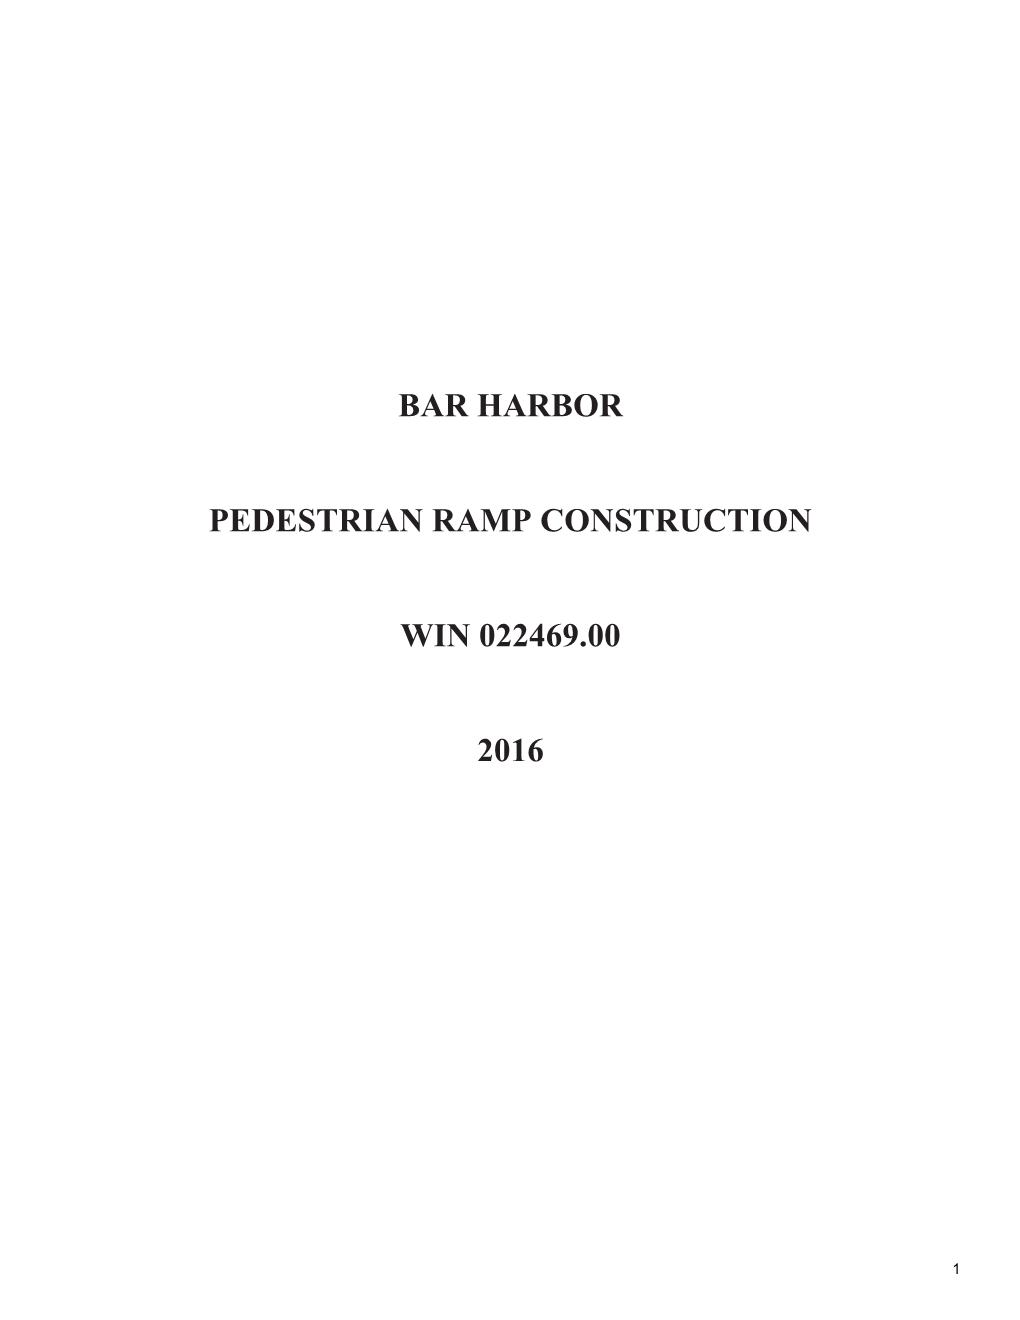 Bar Harbor Pedestrian Ramp Construction Win 022469.00 2016